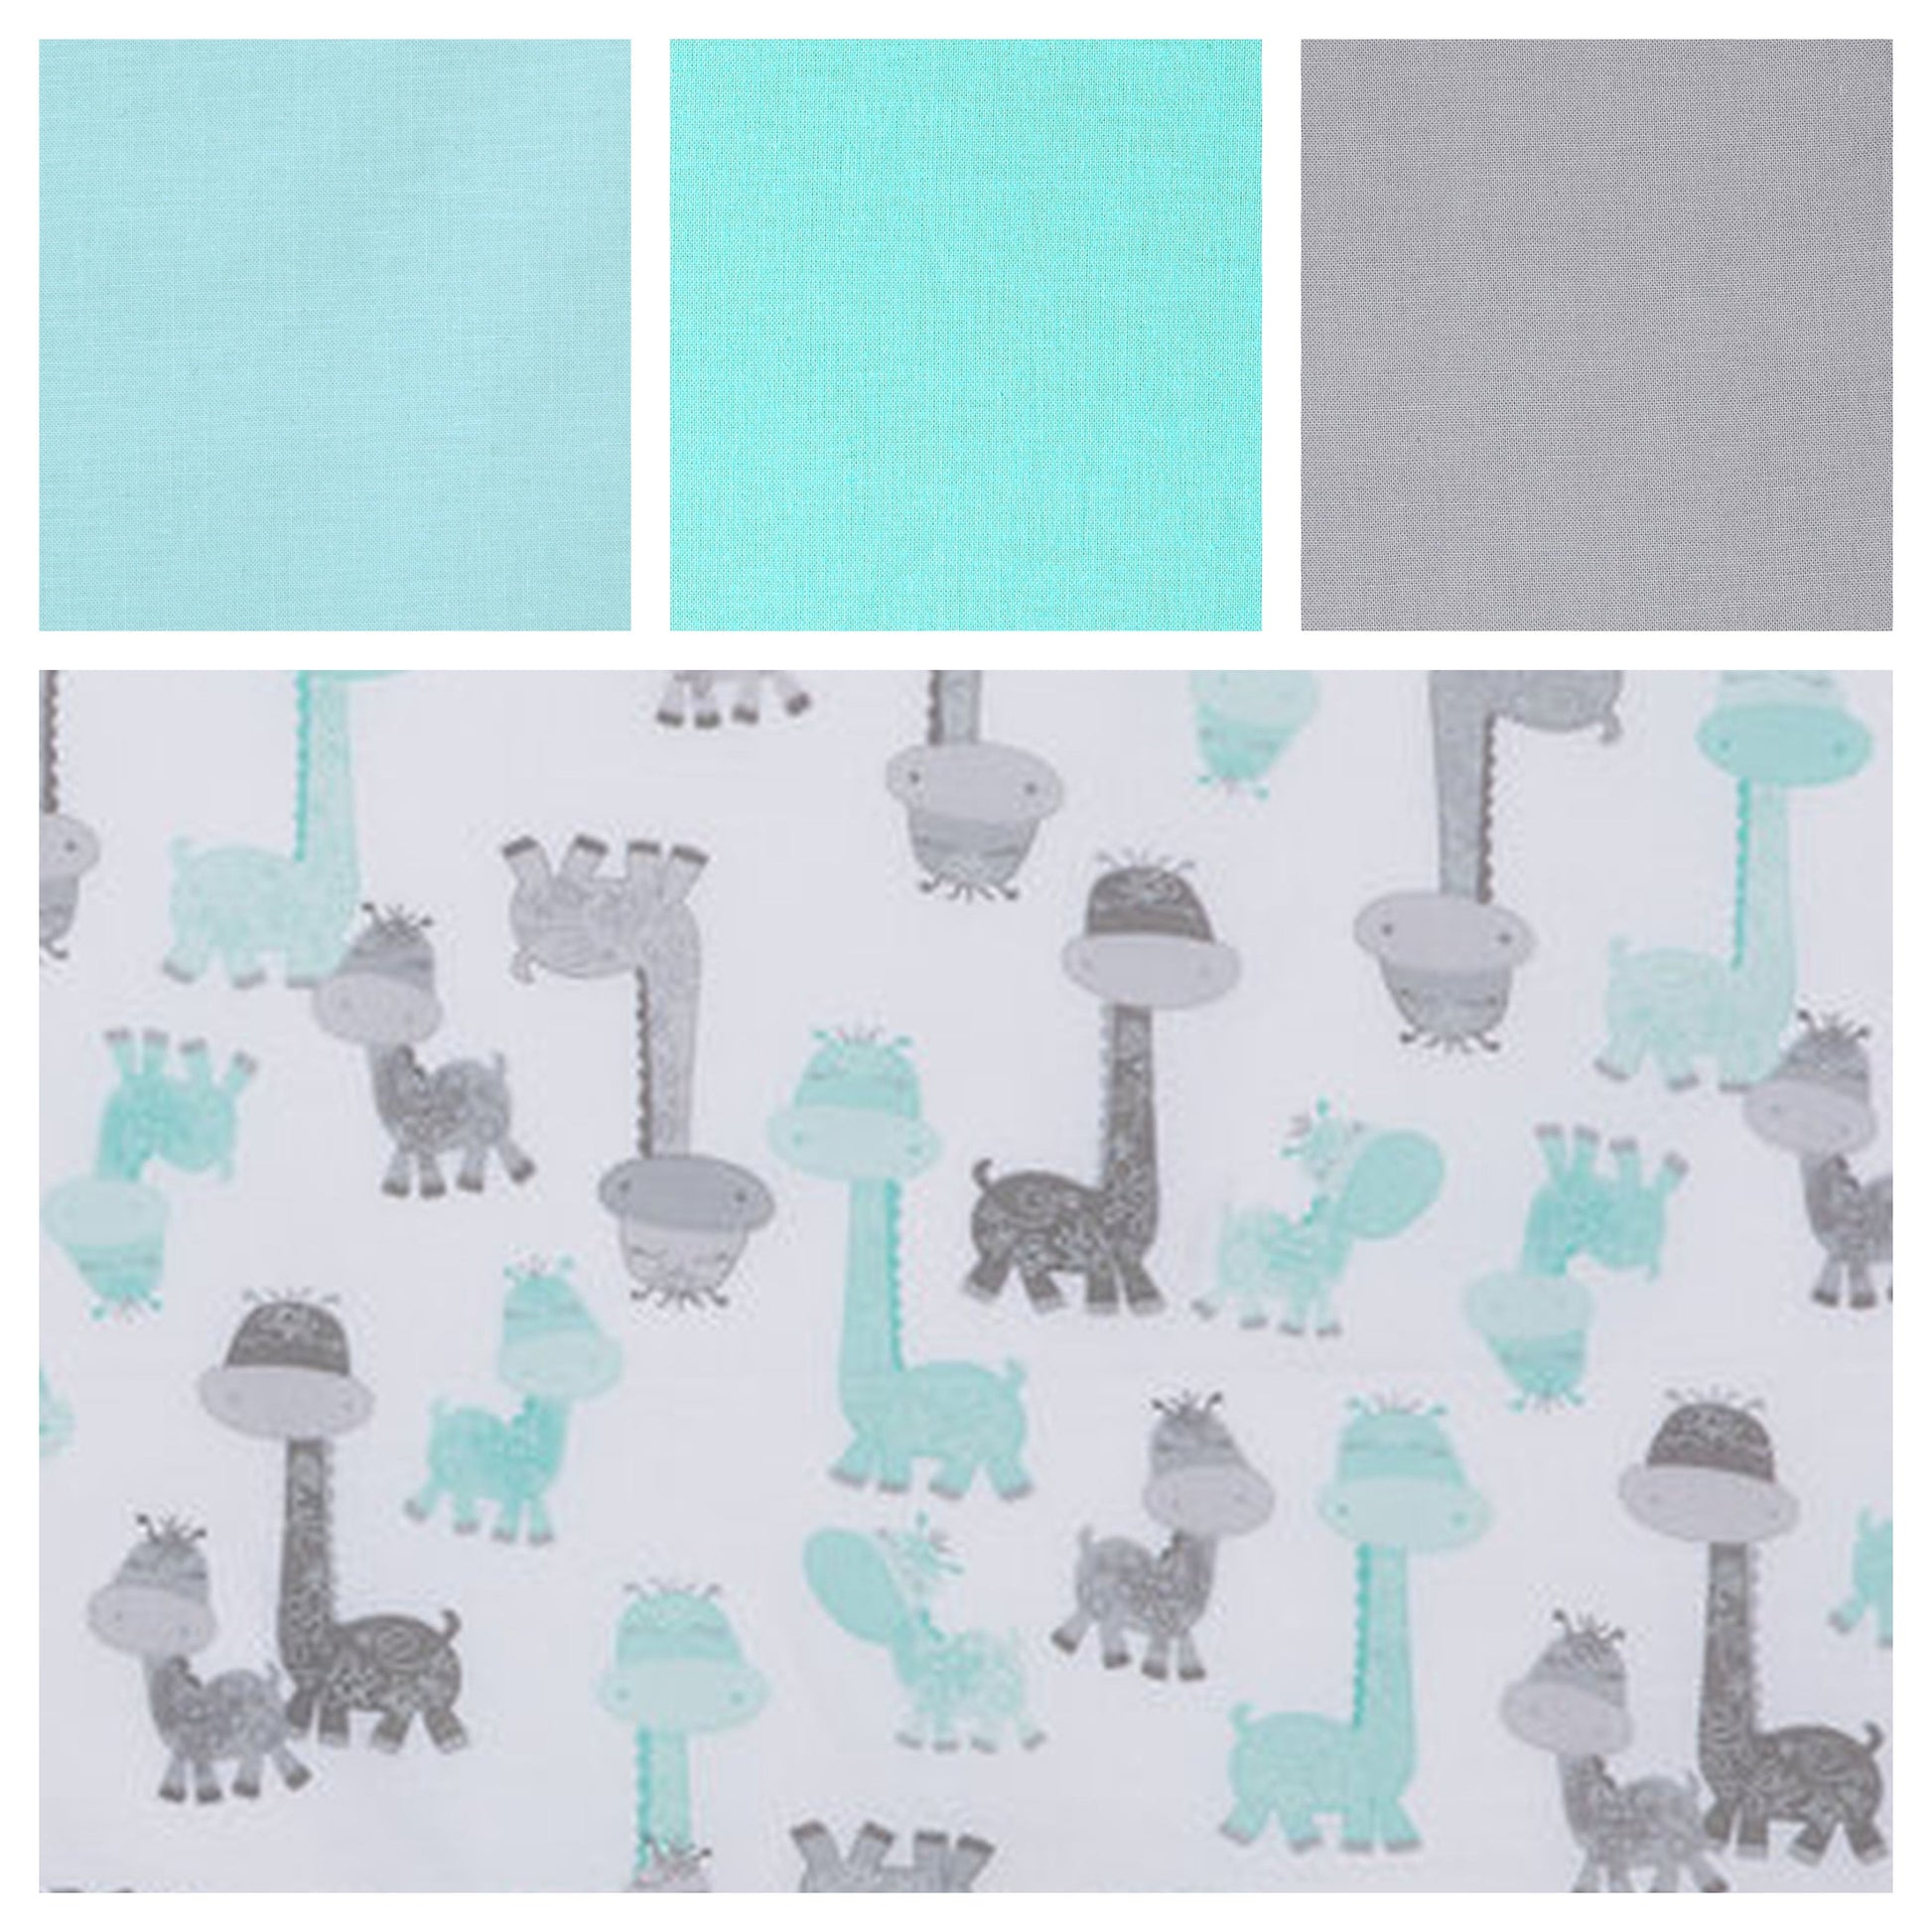 gray and aqua giraffe fabric cotton & minky options aqua or gray